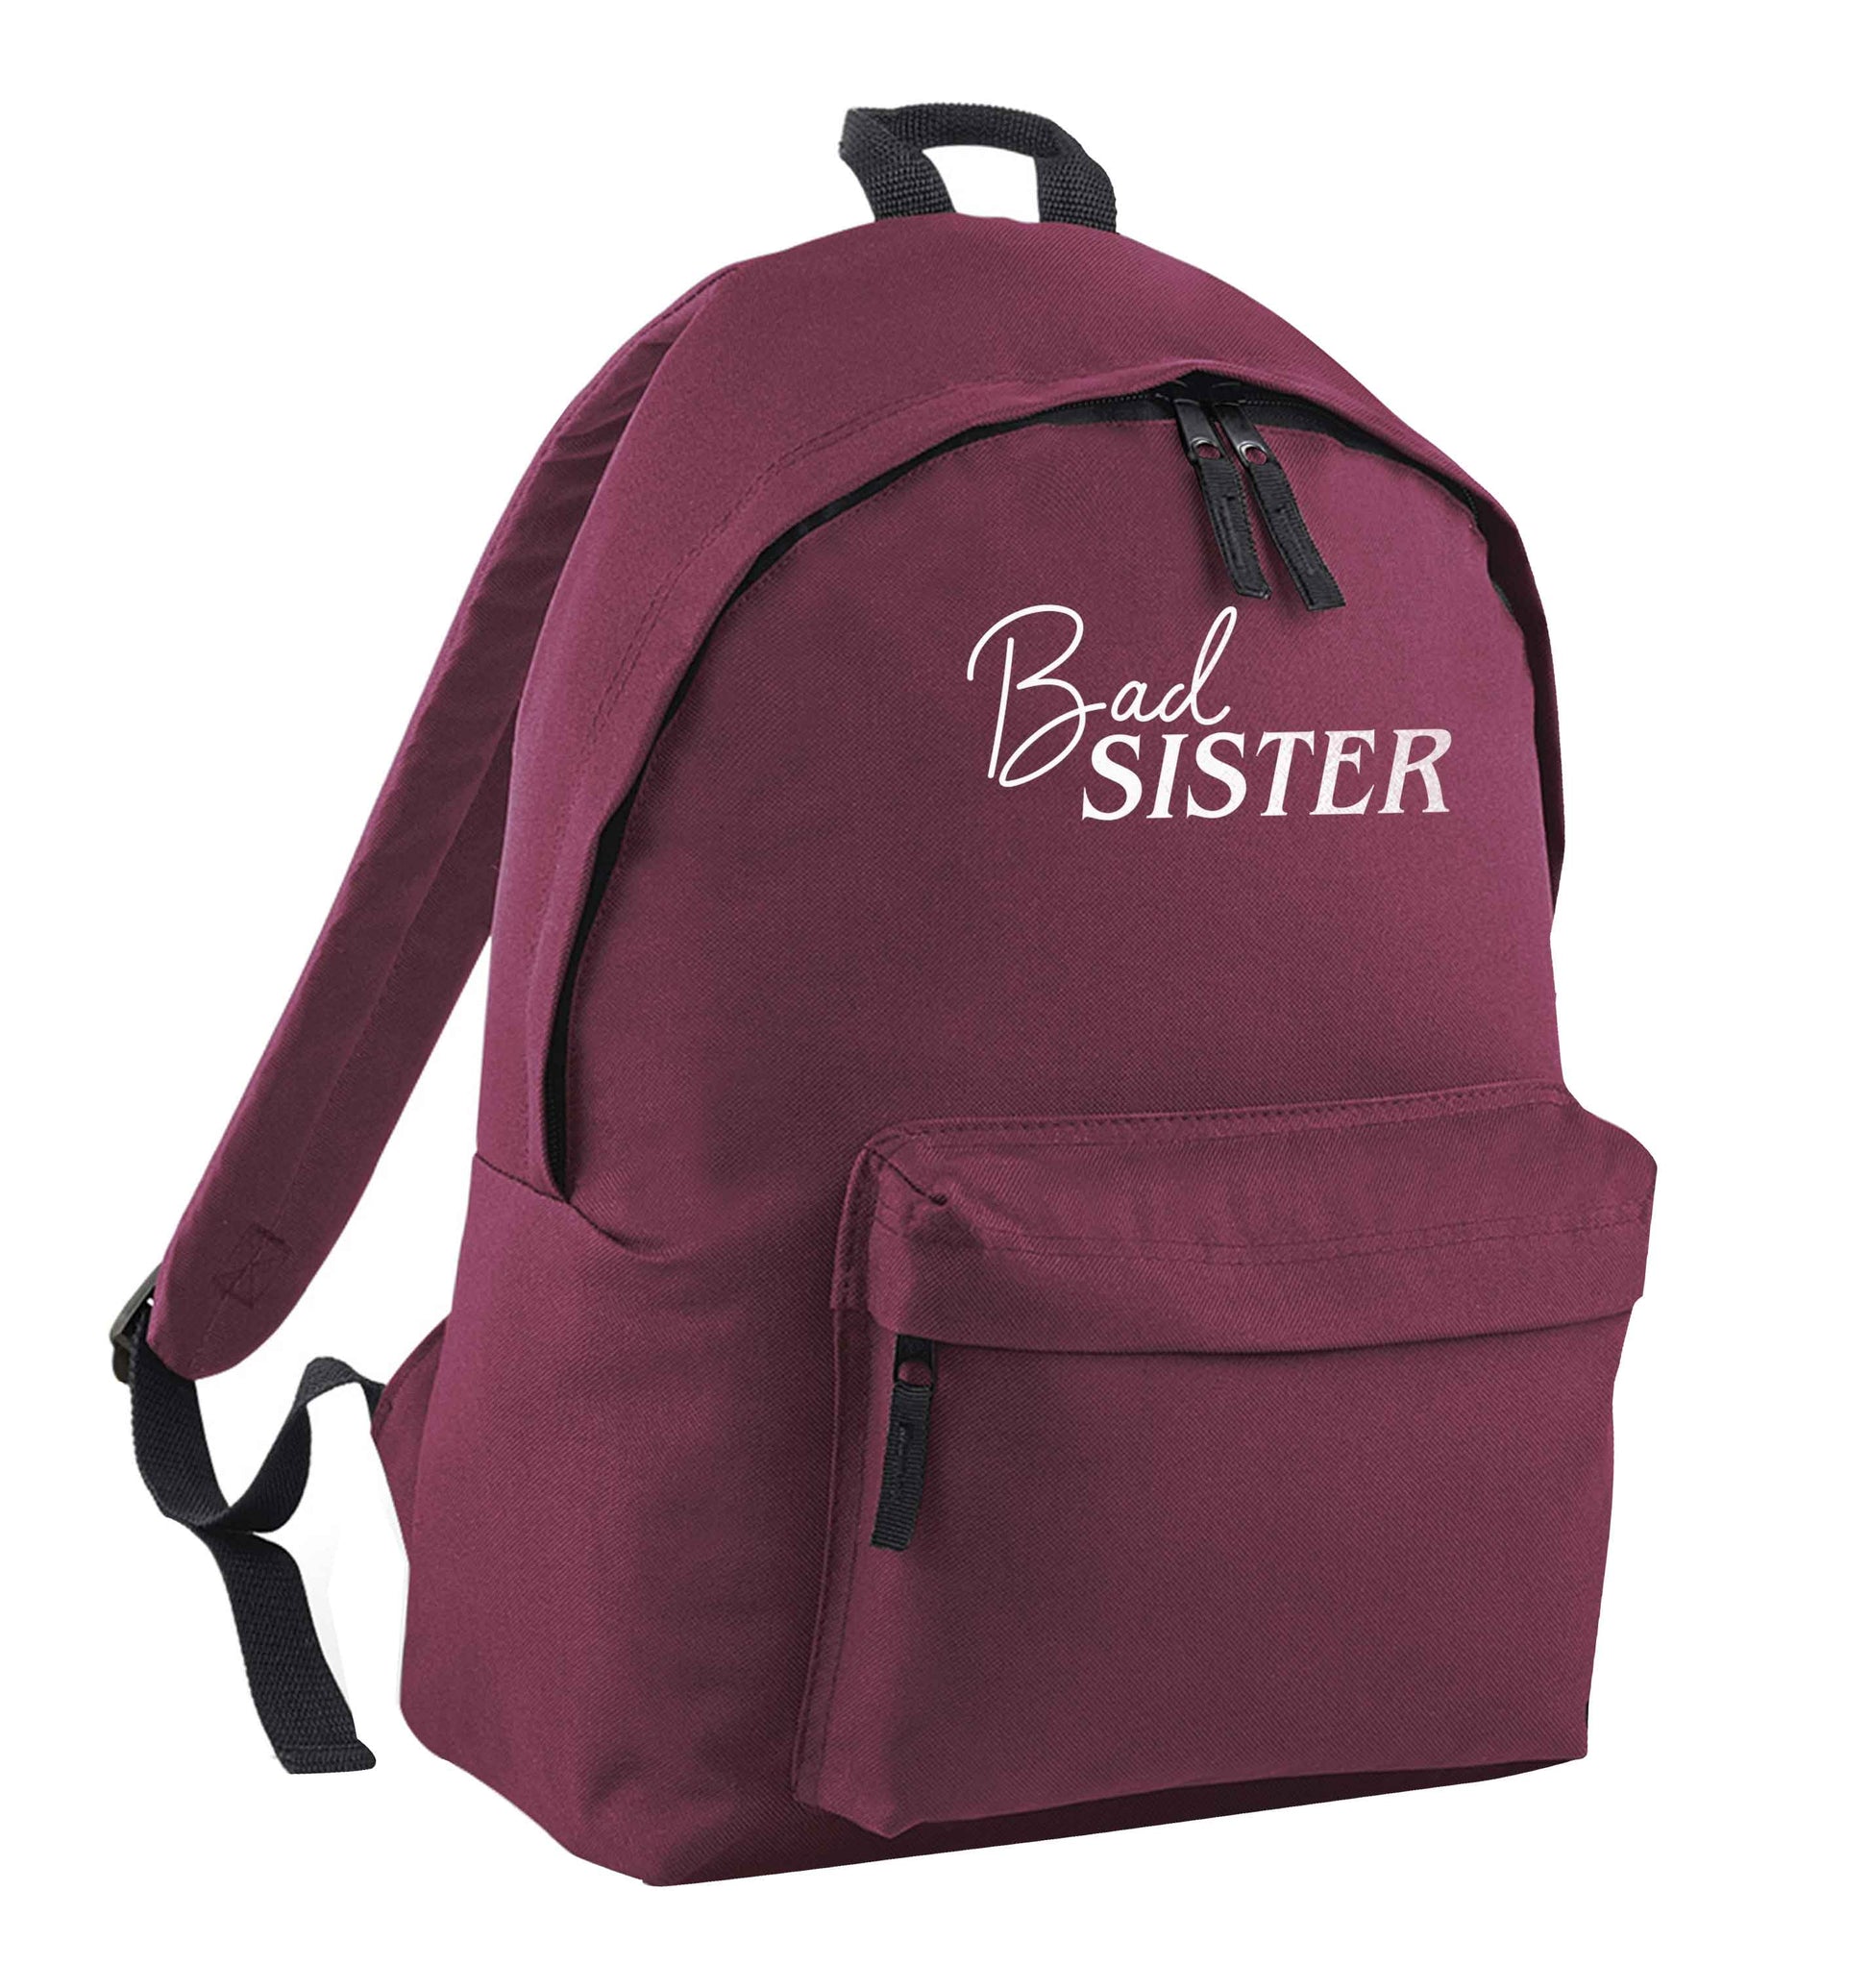 Bad sister maroon adults backpack